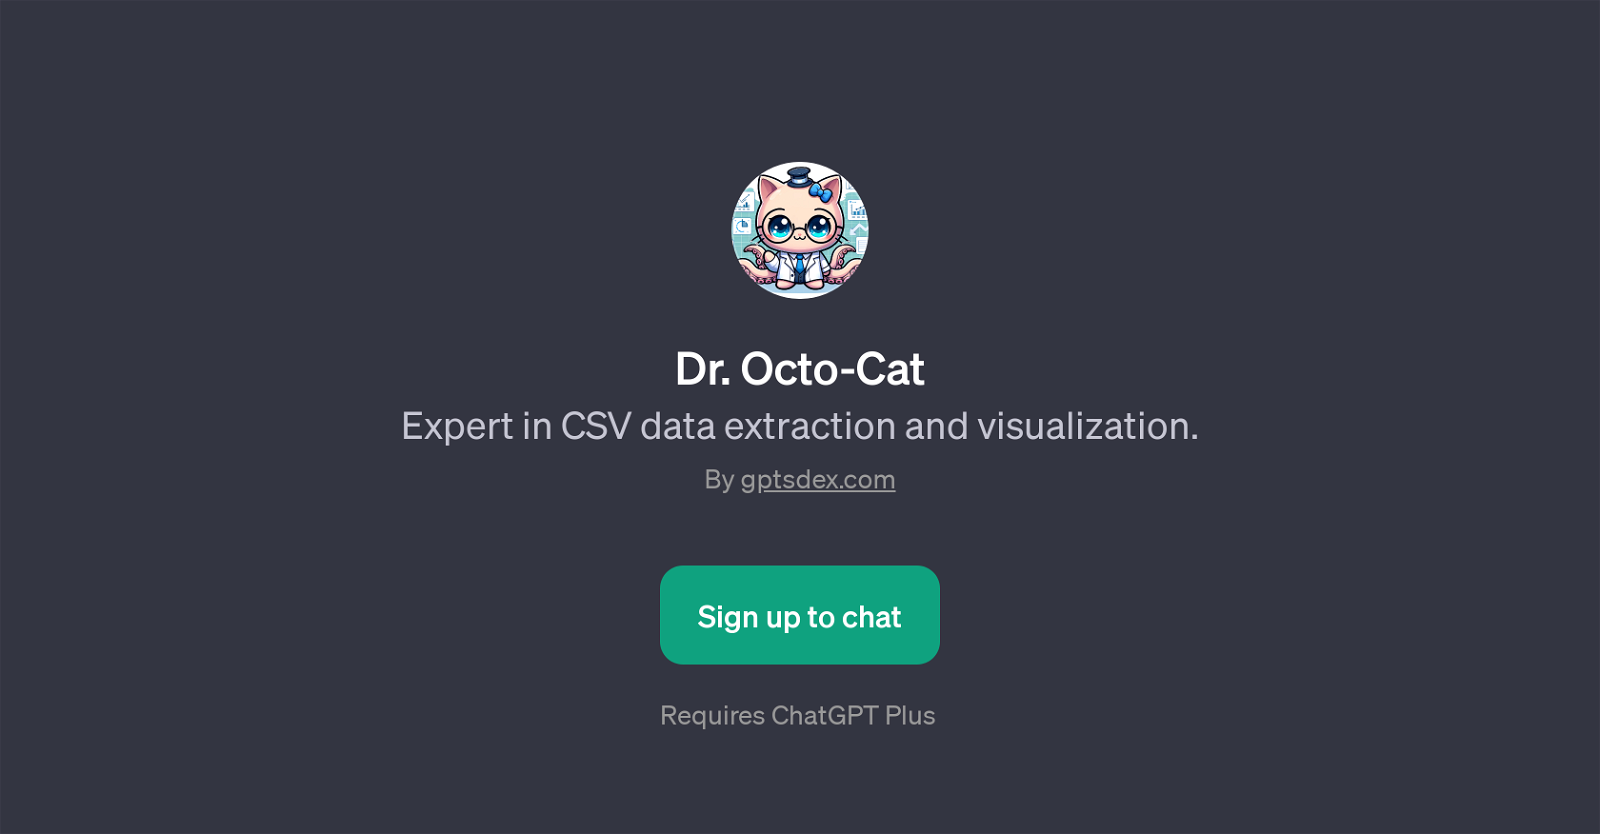 Dr. Octo-Cat website